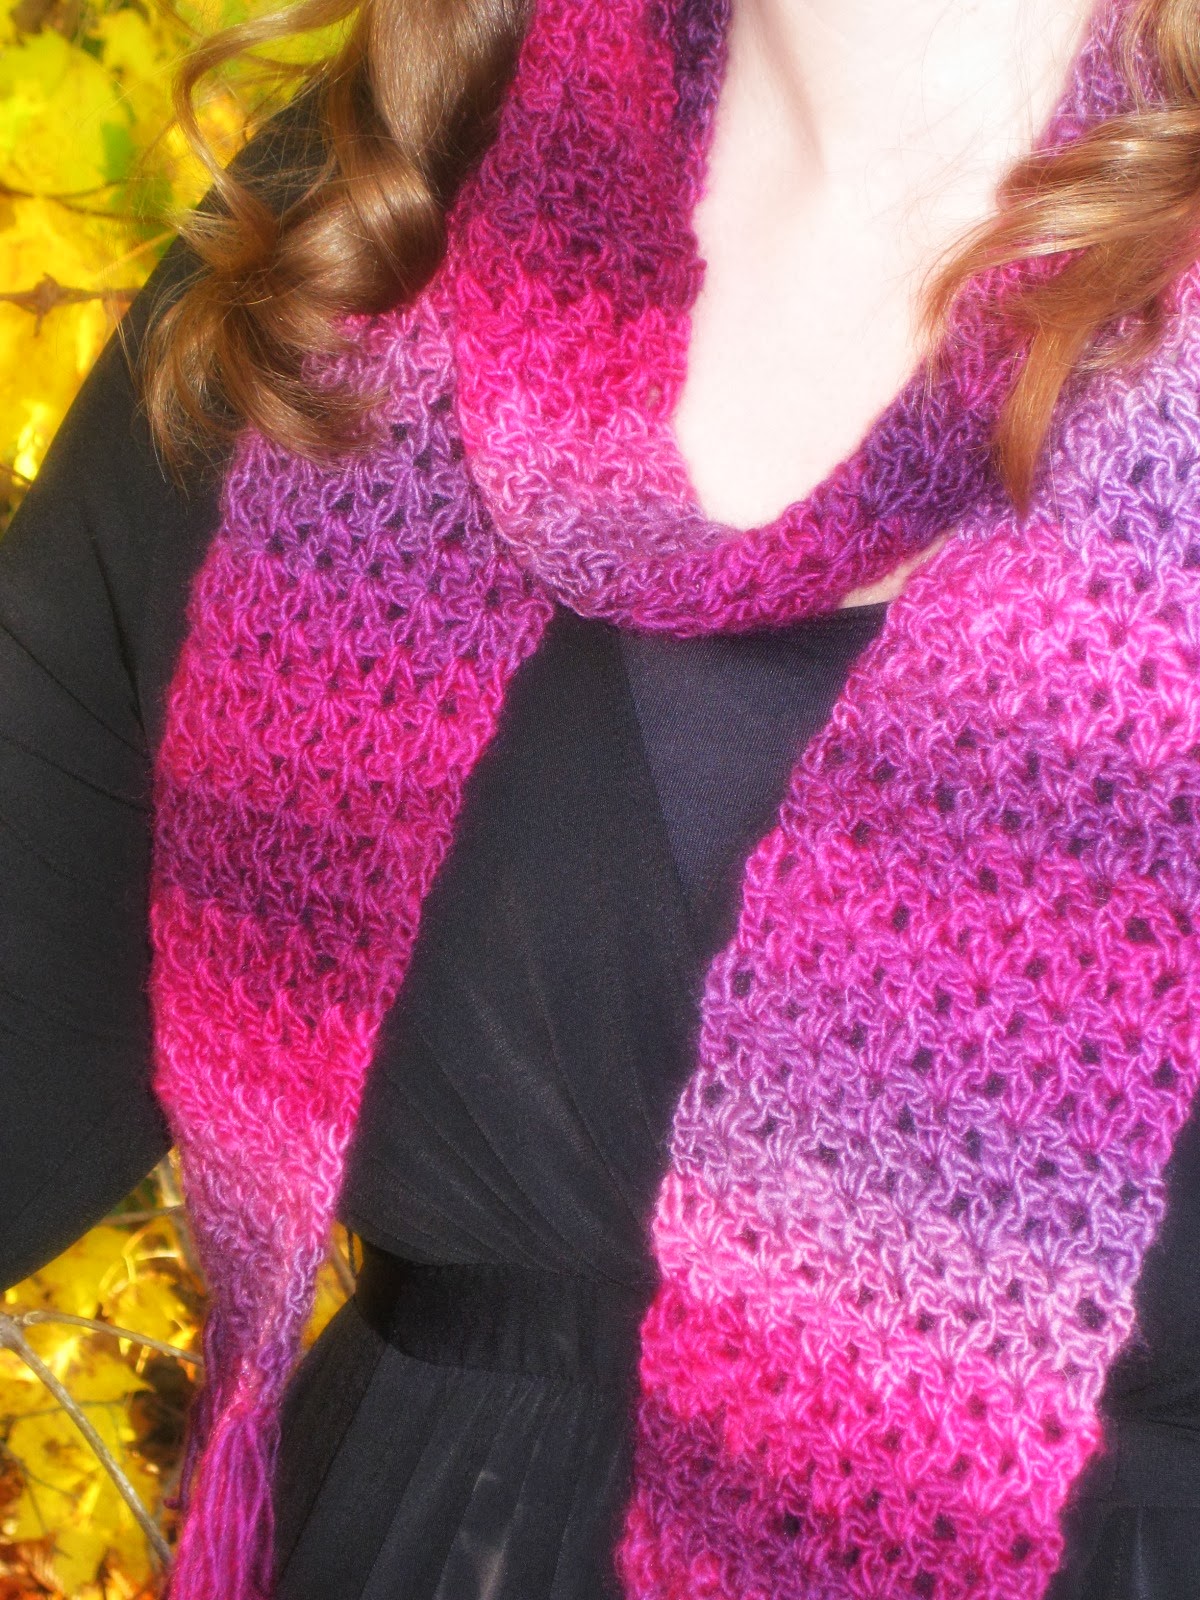 Unforgettable One-Skein Scarf - Free Crochet Pattern - love. life. yarn.